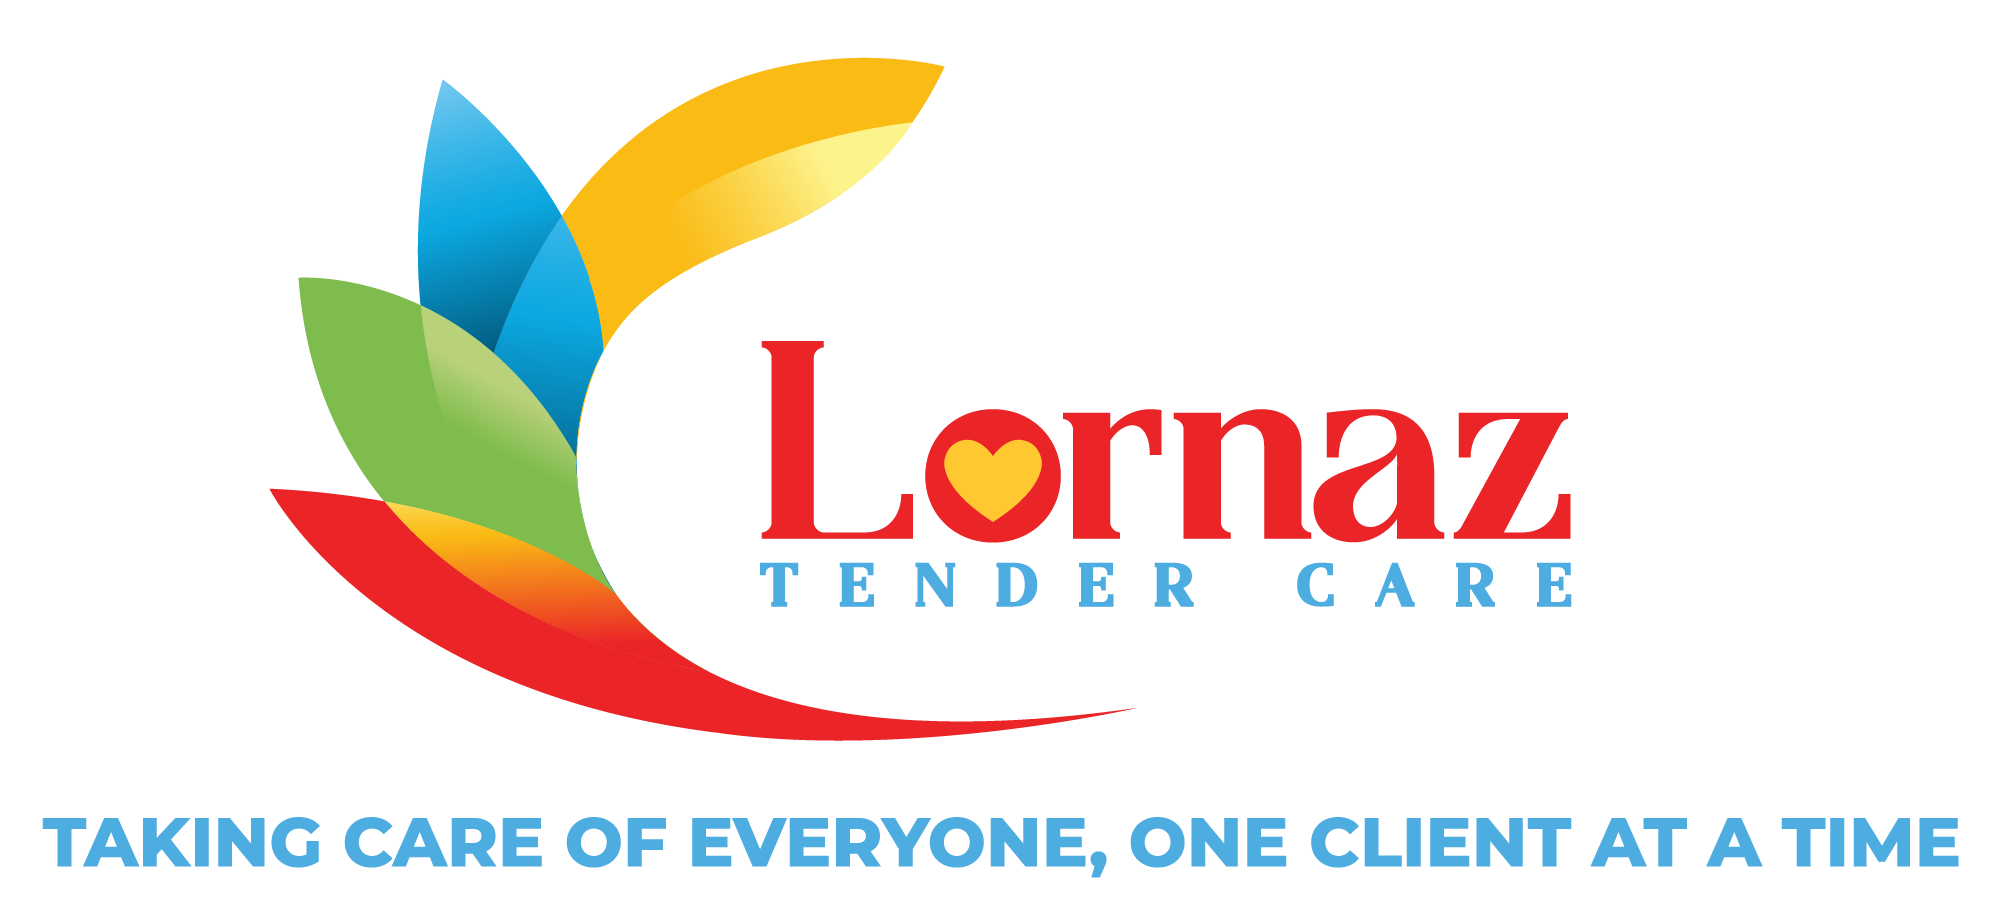 CX-12307_Lornaz-Tender-Care_FINAL_REVISED2